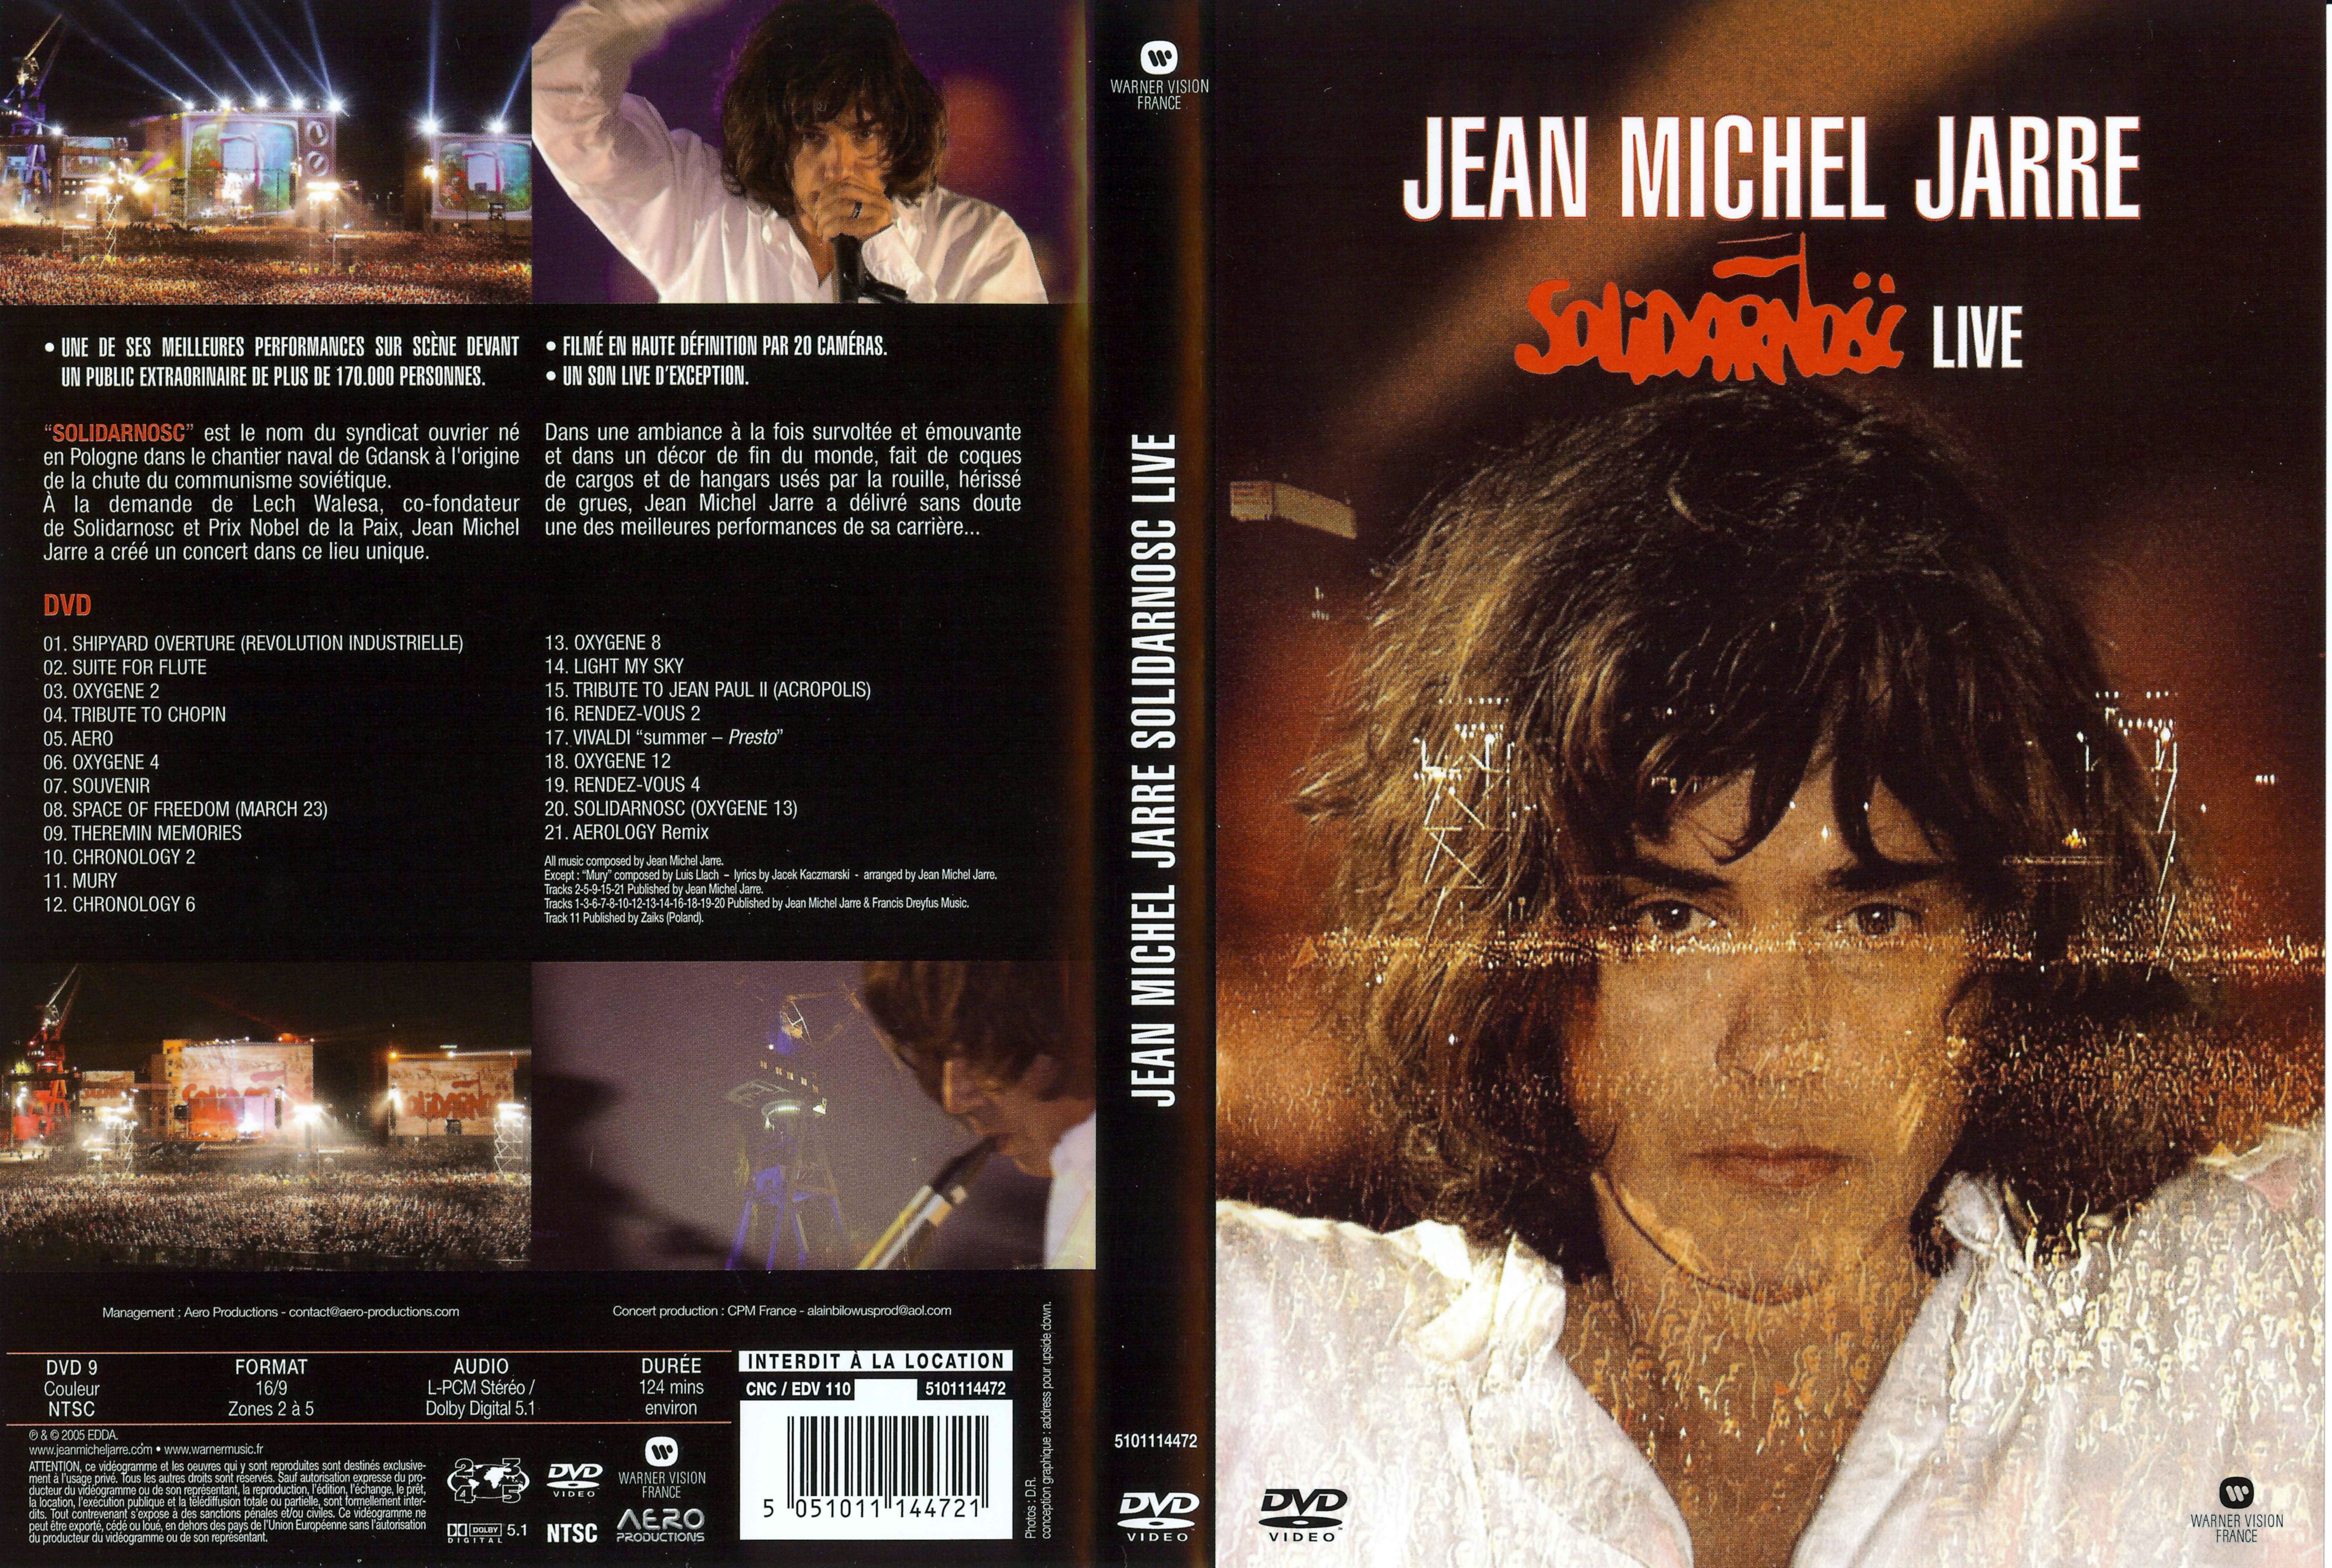 Jaquette DVD Jean-Michel Jarre - Solidarnosc live